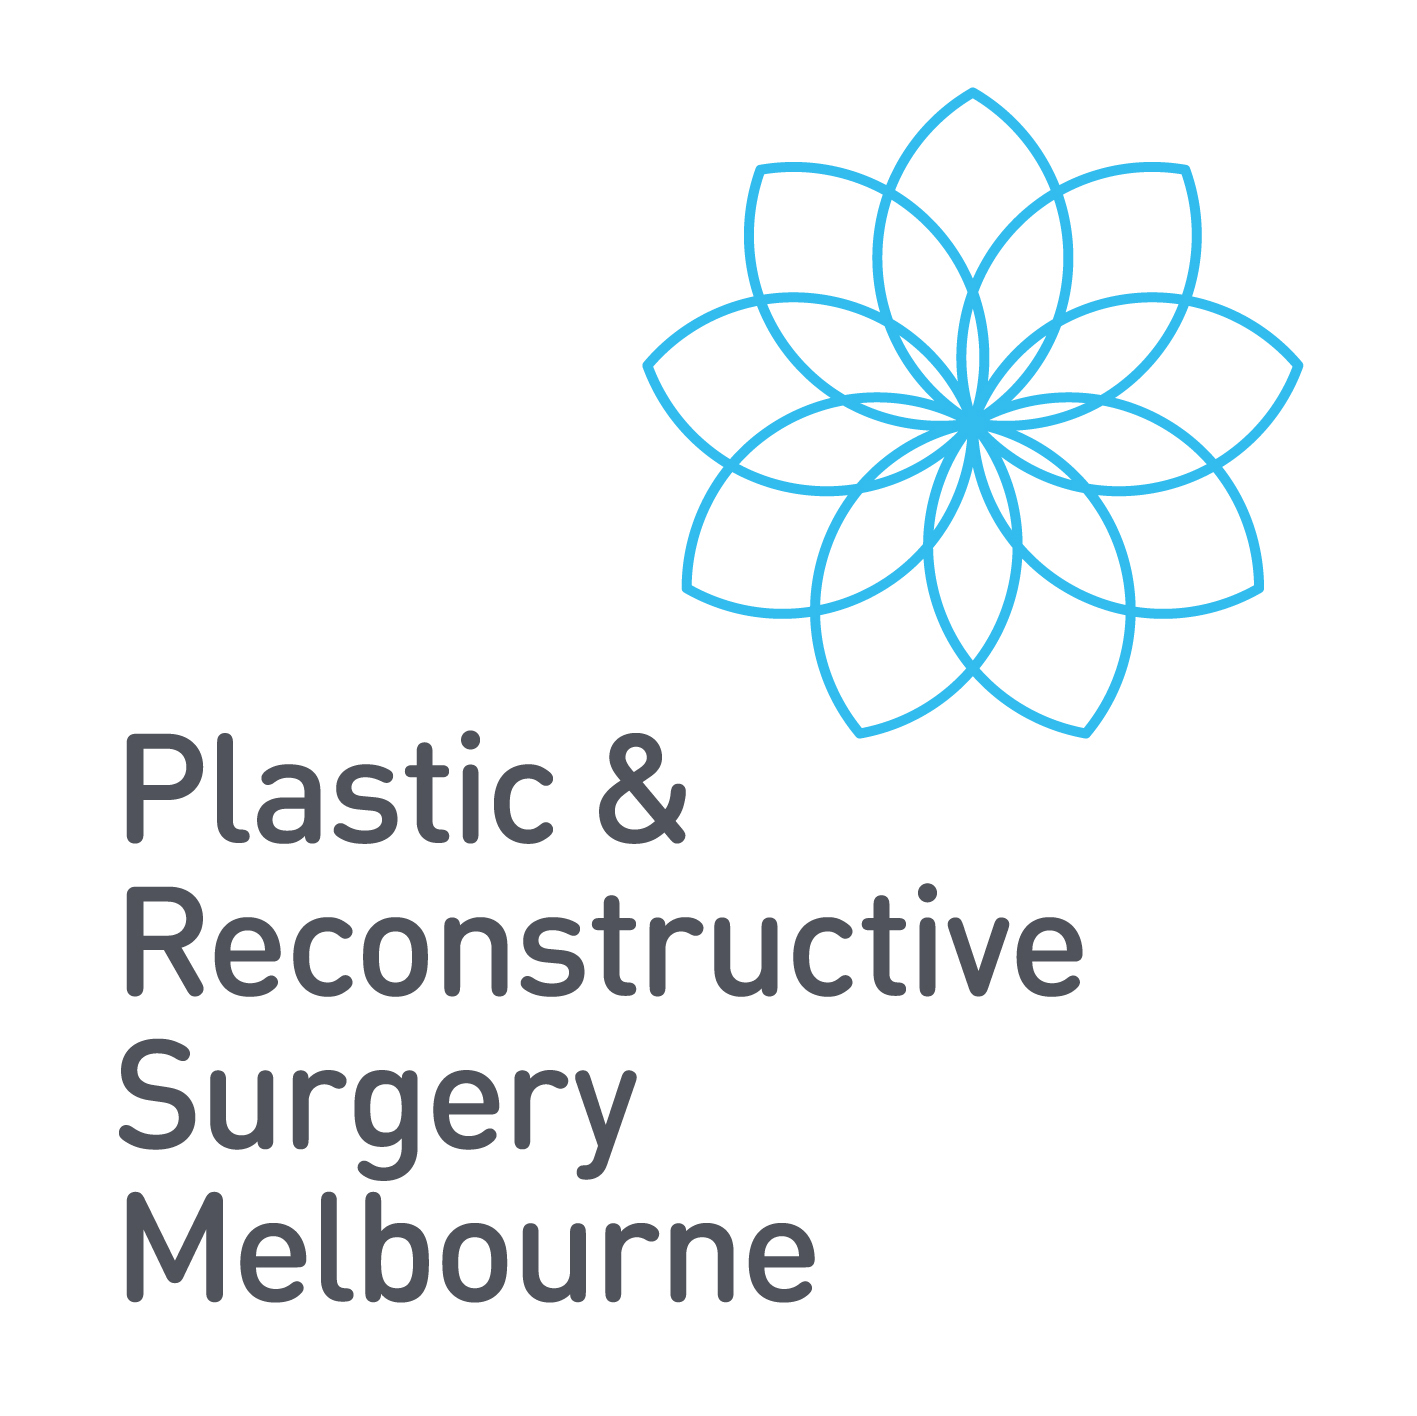 Plastic and Reconstructive Surgery Melbourne (PRS)